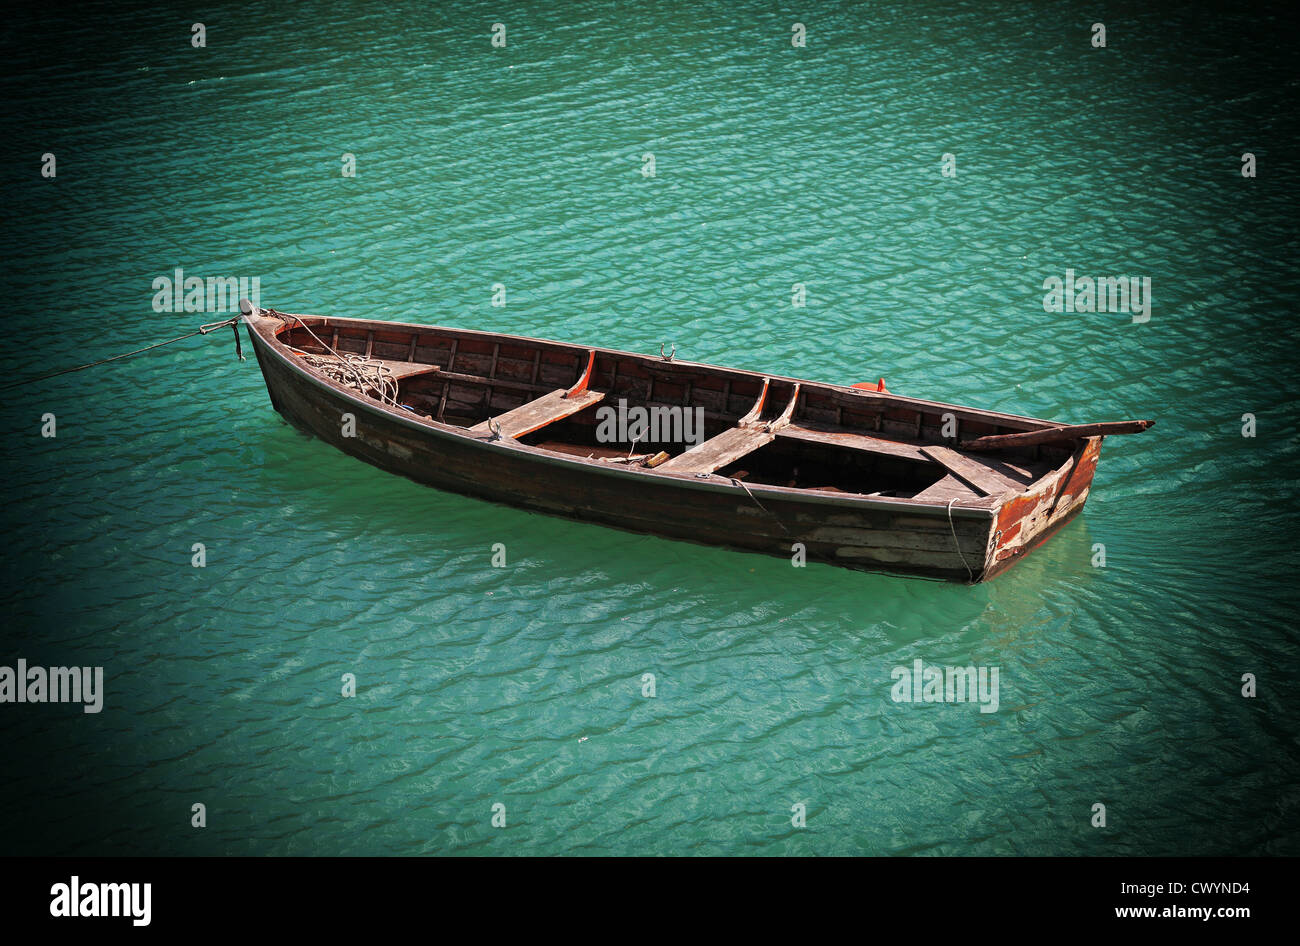 wood boat on green lake Stock Photo